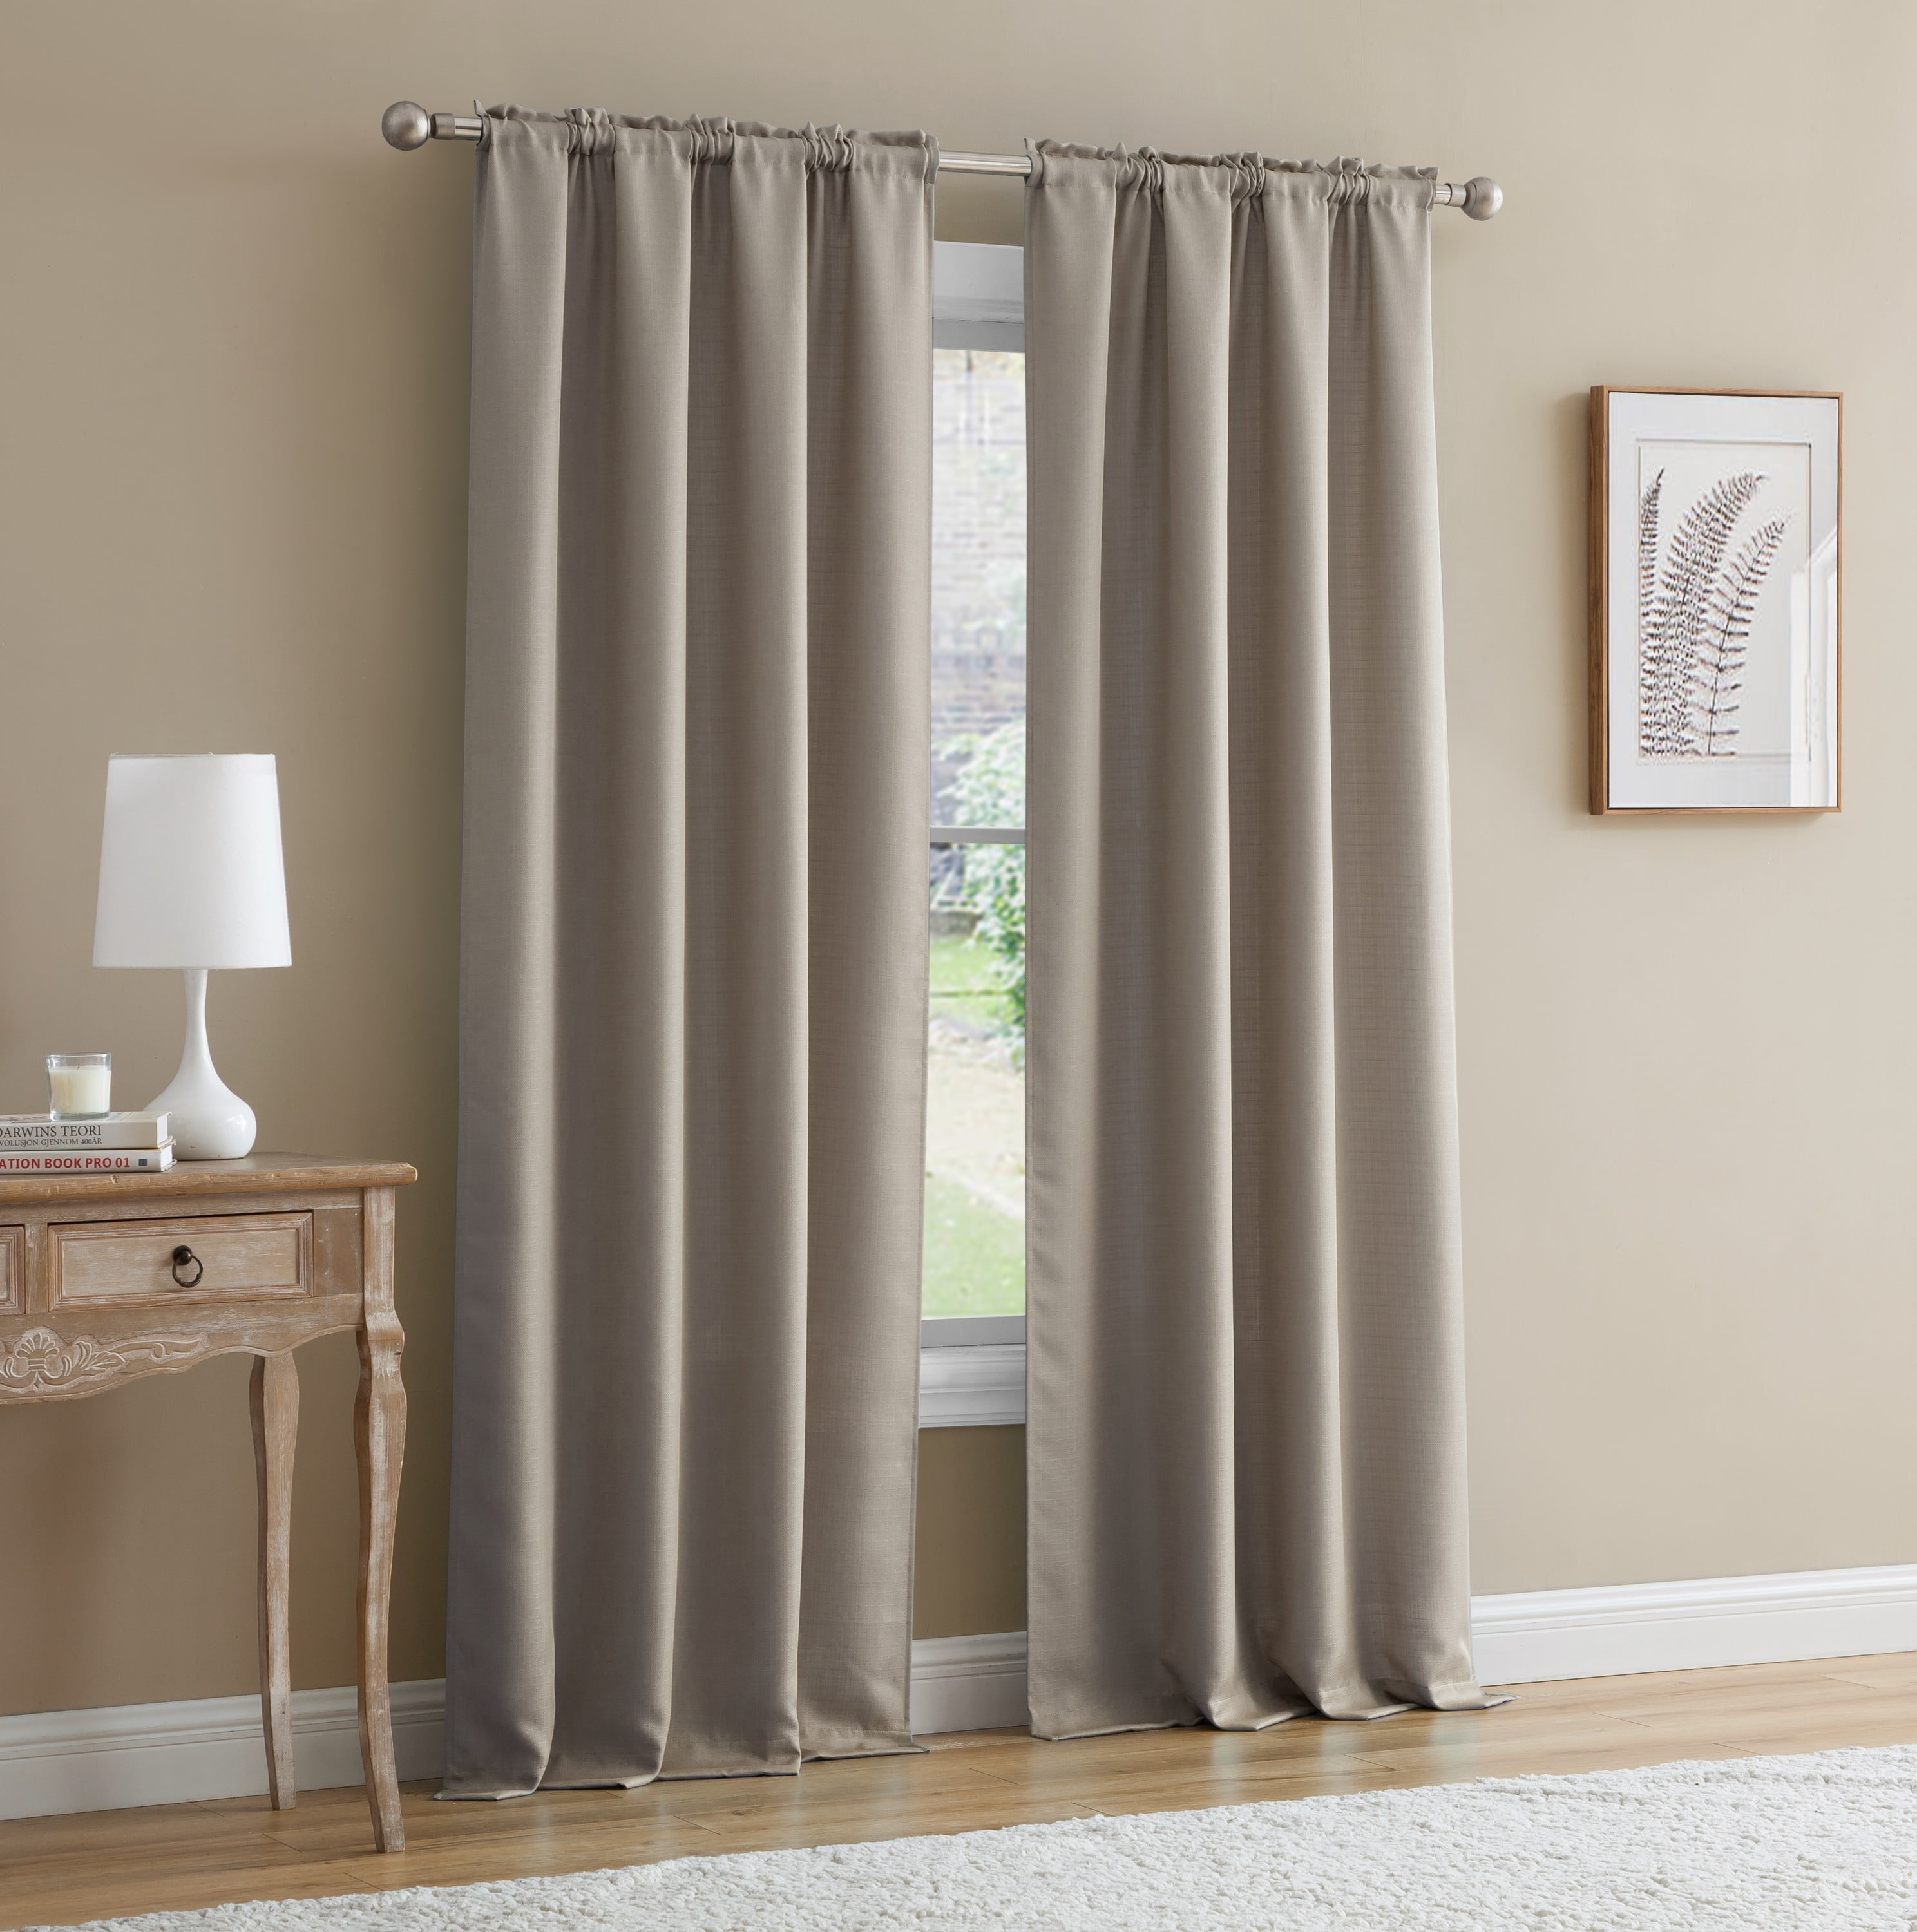 Mainstays Bennett Textured Curtain, Brown 84 inch, Set of (2) - Walmart.com